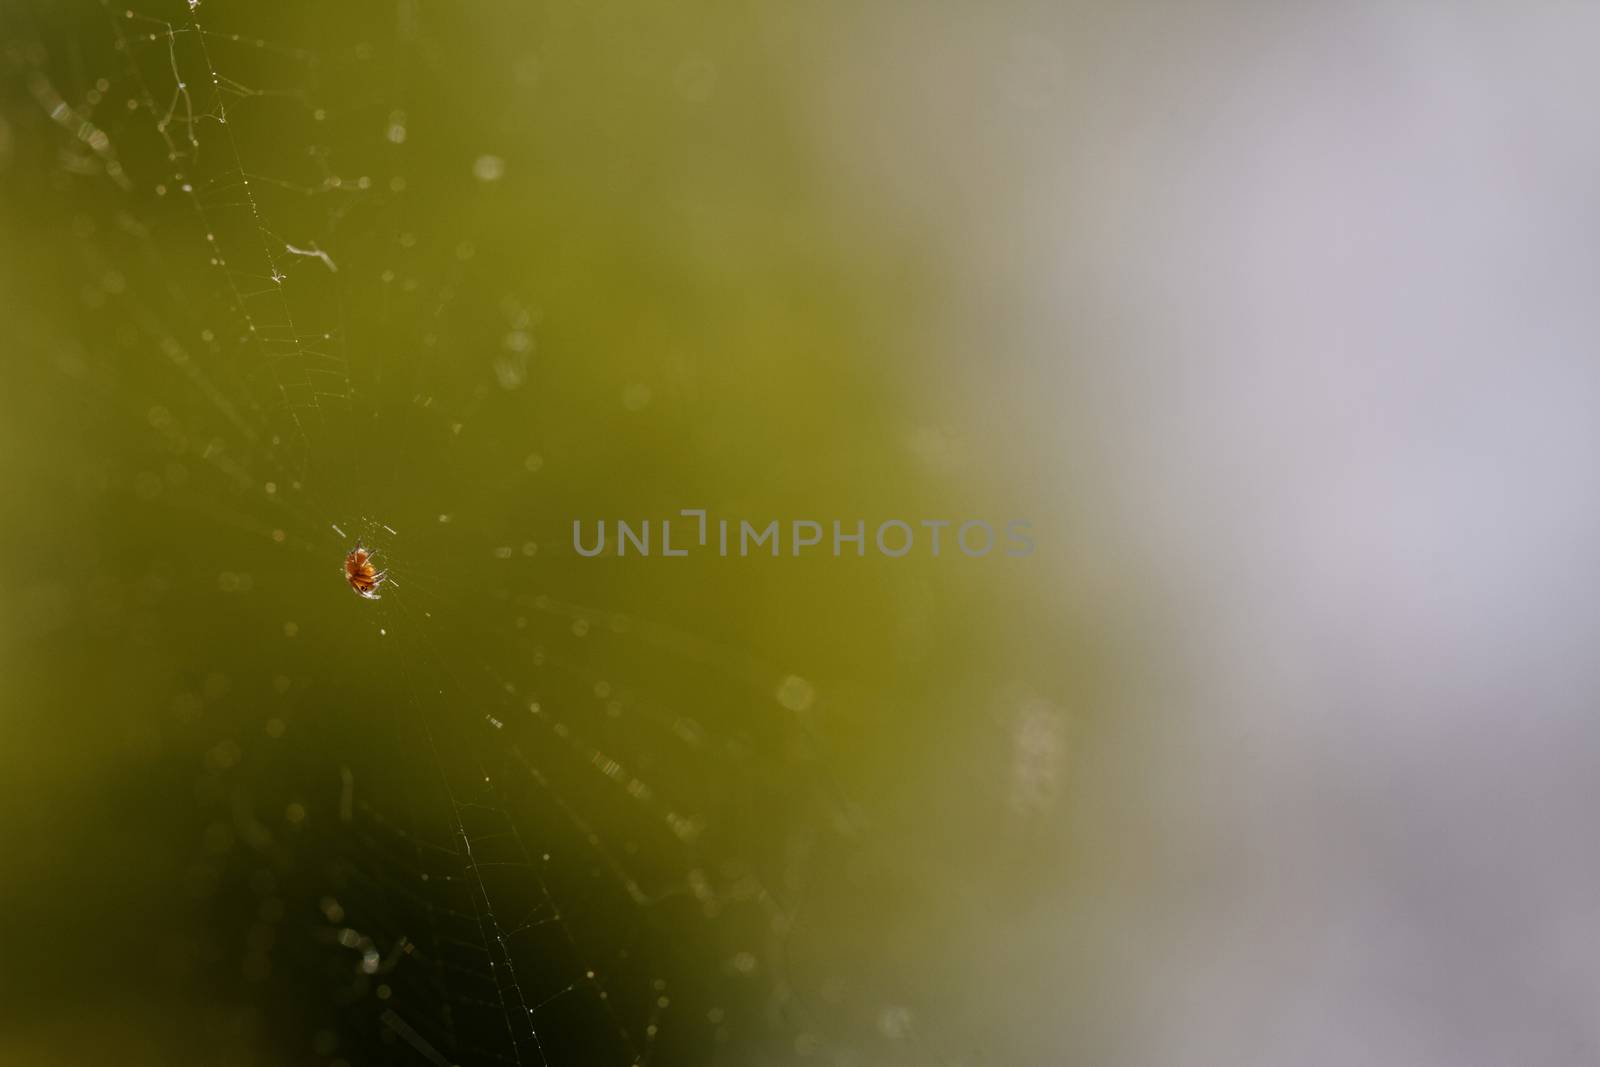 Small spider by Nneirda